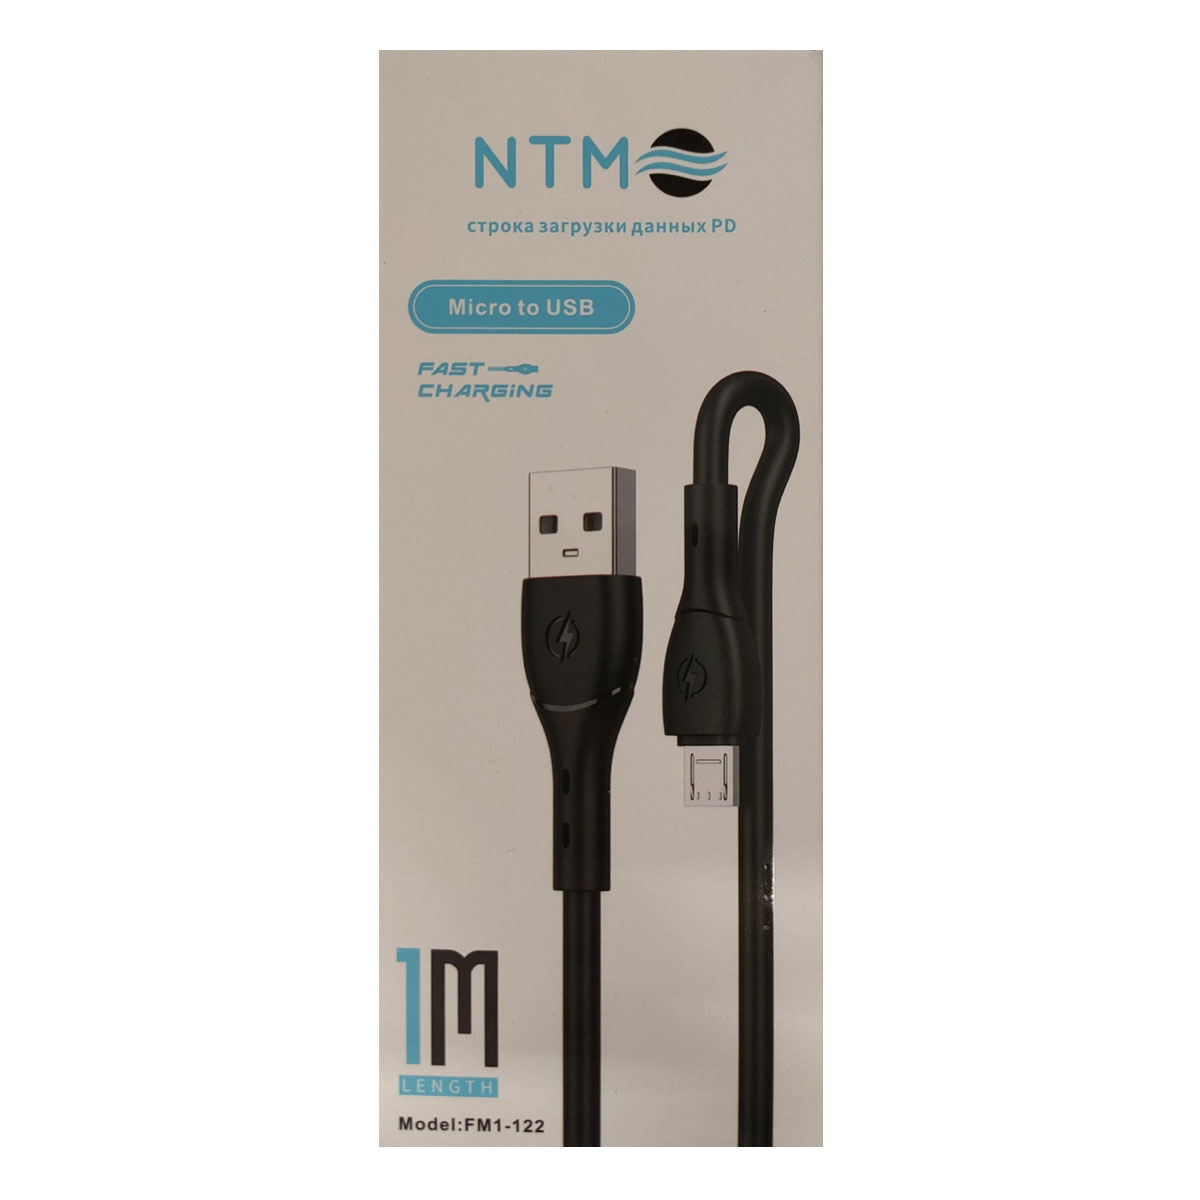 Кабель NTM FM1-122 Micro USB, длина 1 метр, цвет черный